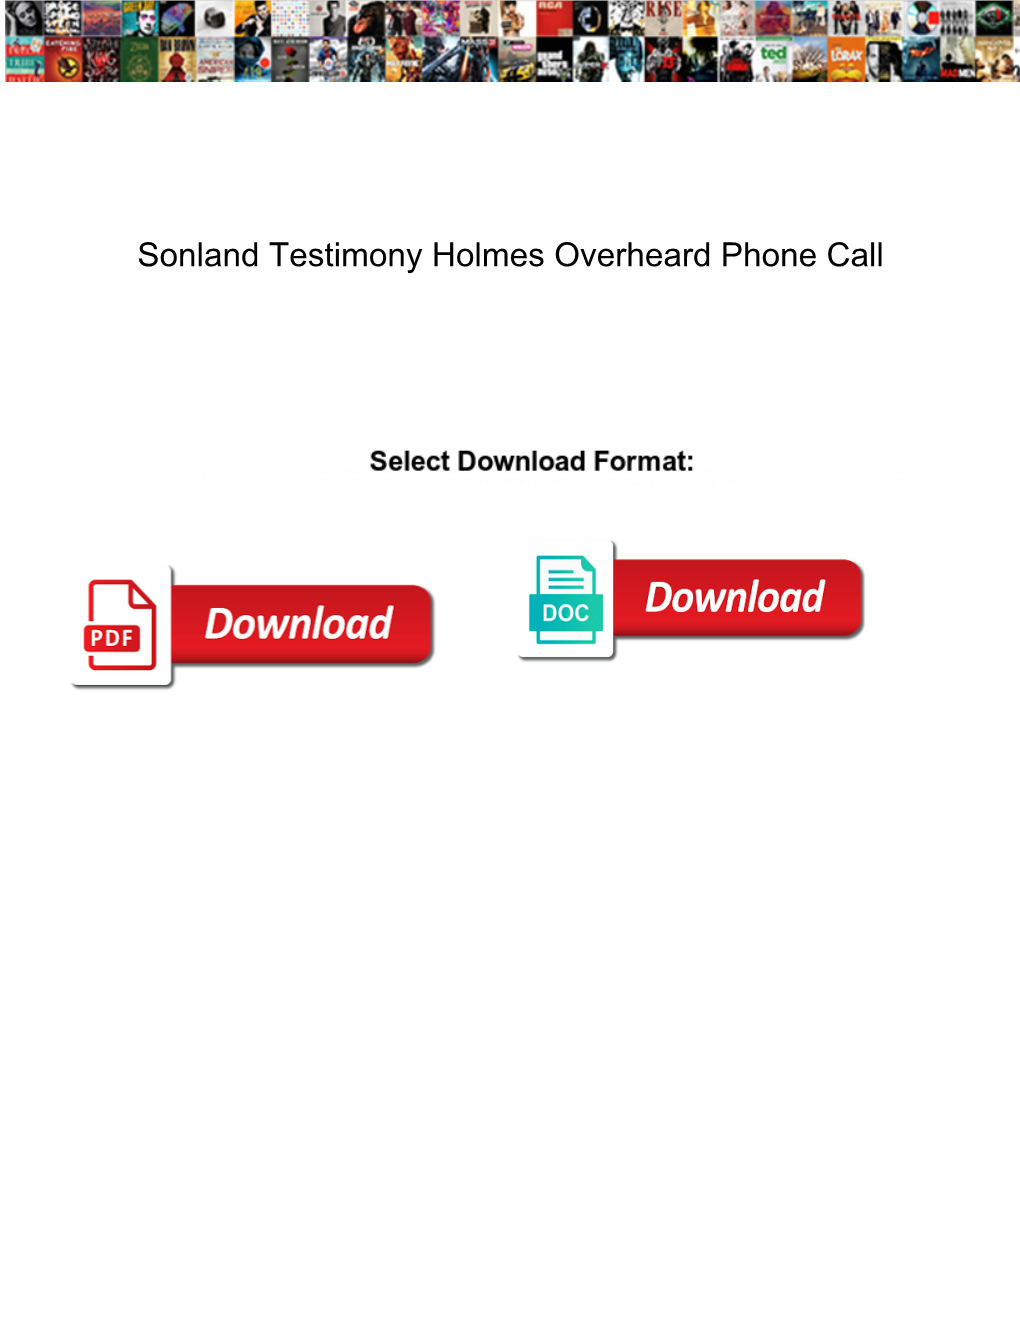 Sonland Testimony Holmes Overheard Phone Call